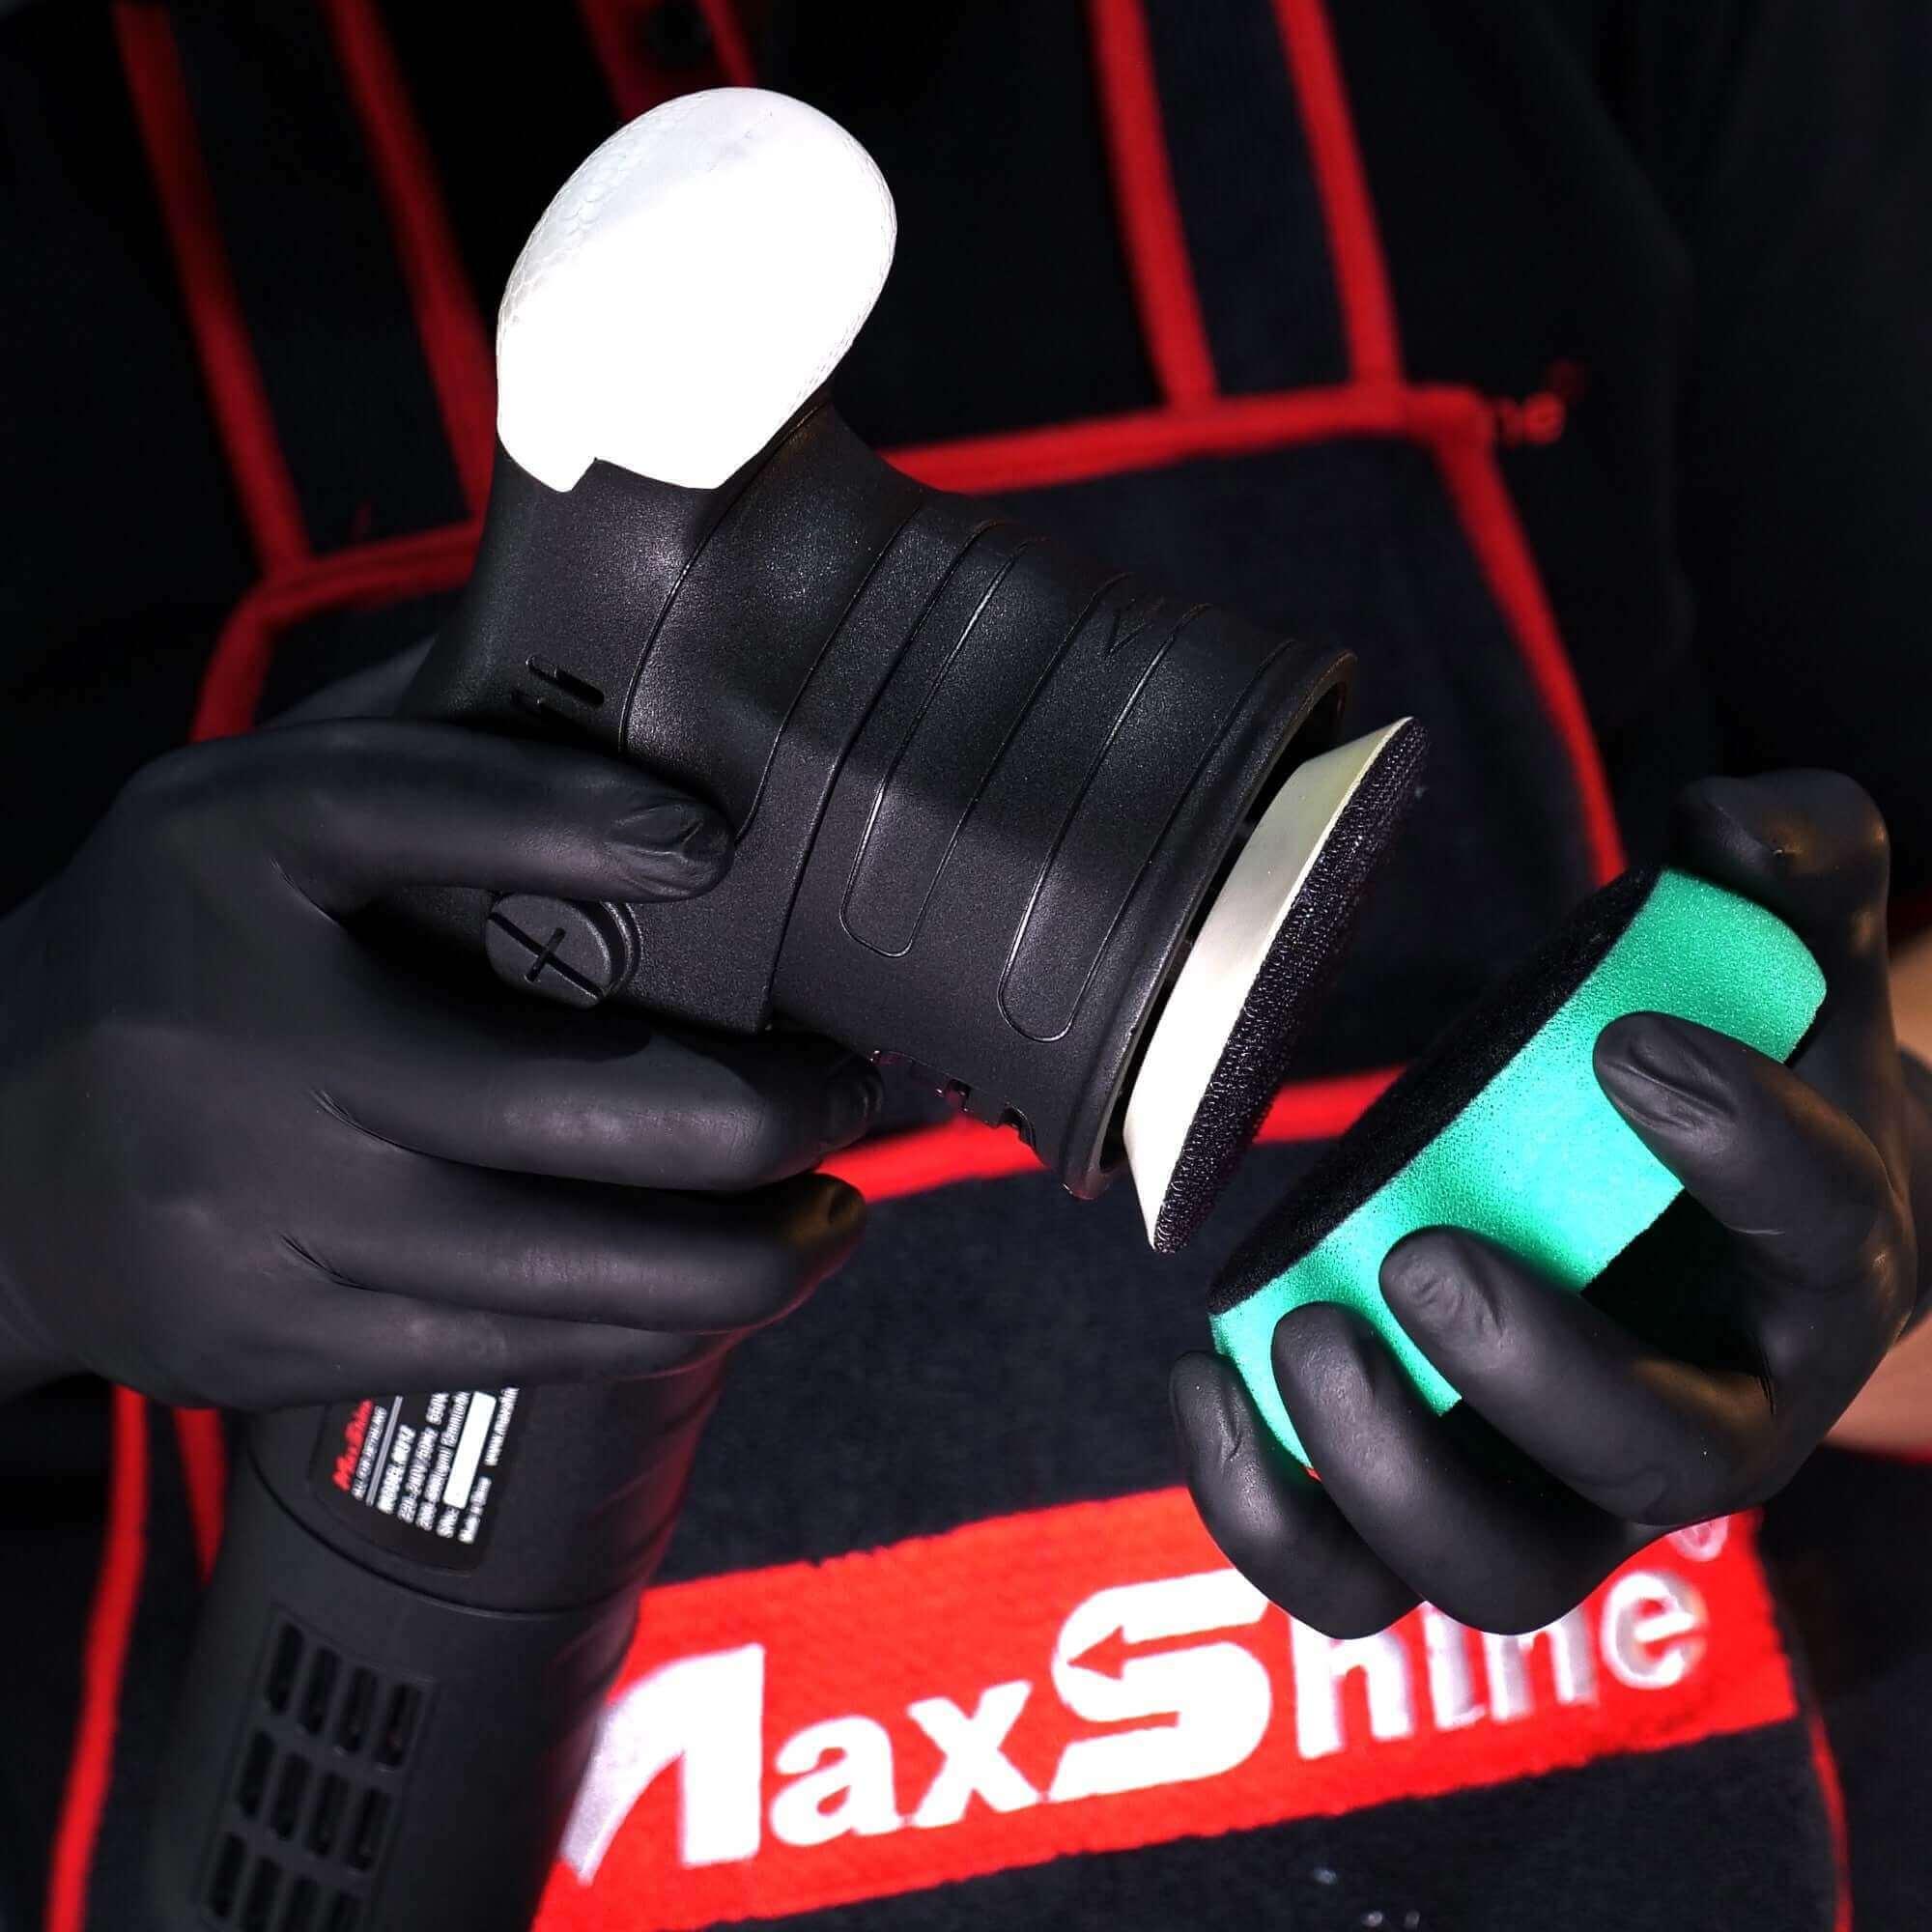 Maxshine | Maxshine M312 (3 Inch) 12mm/550W Dual Action Polisher at R 3499.00